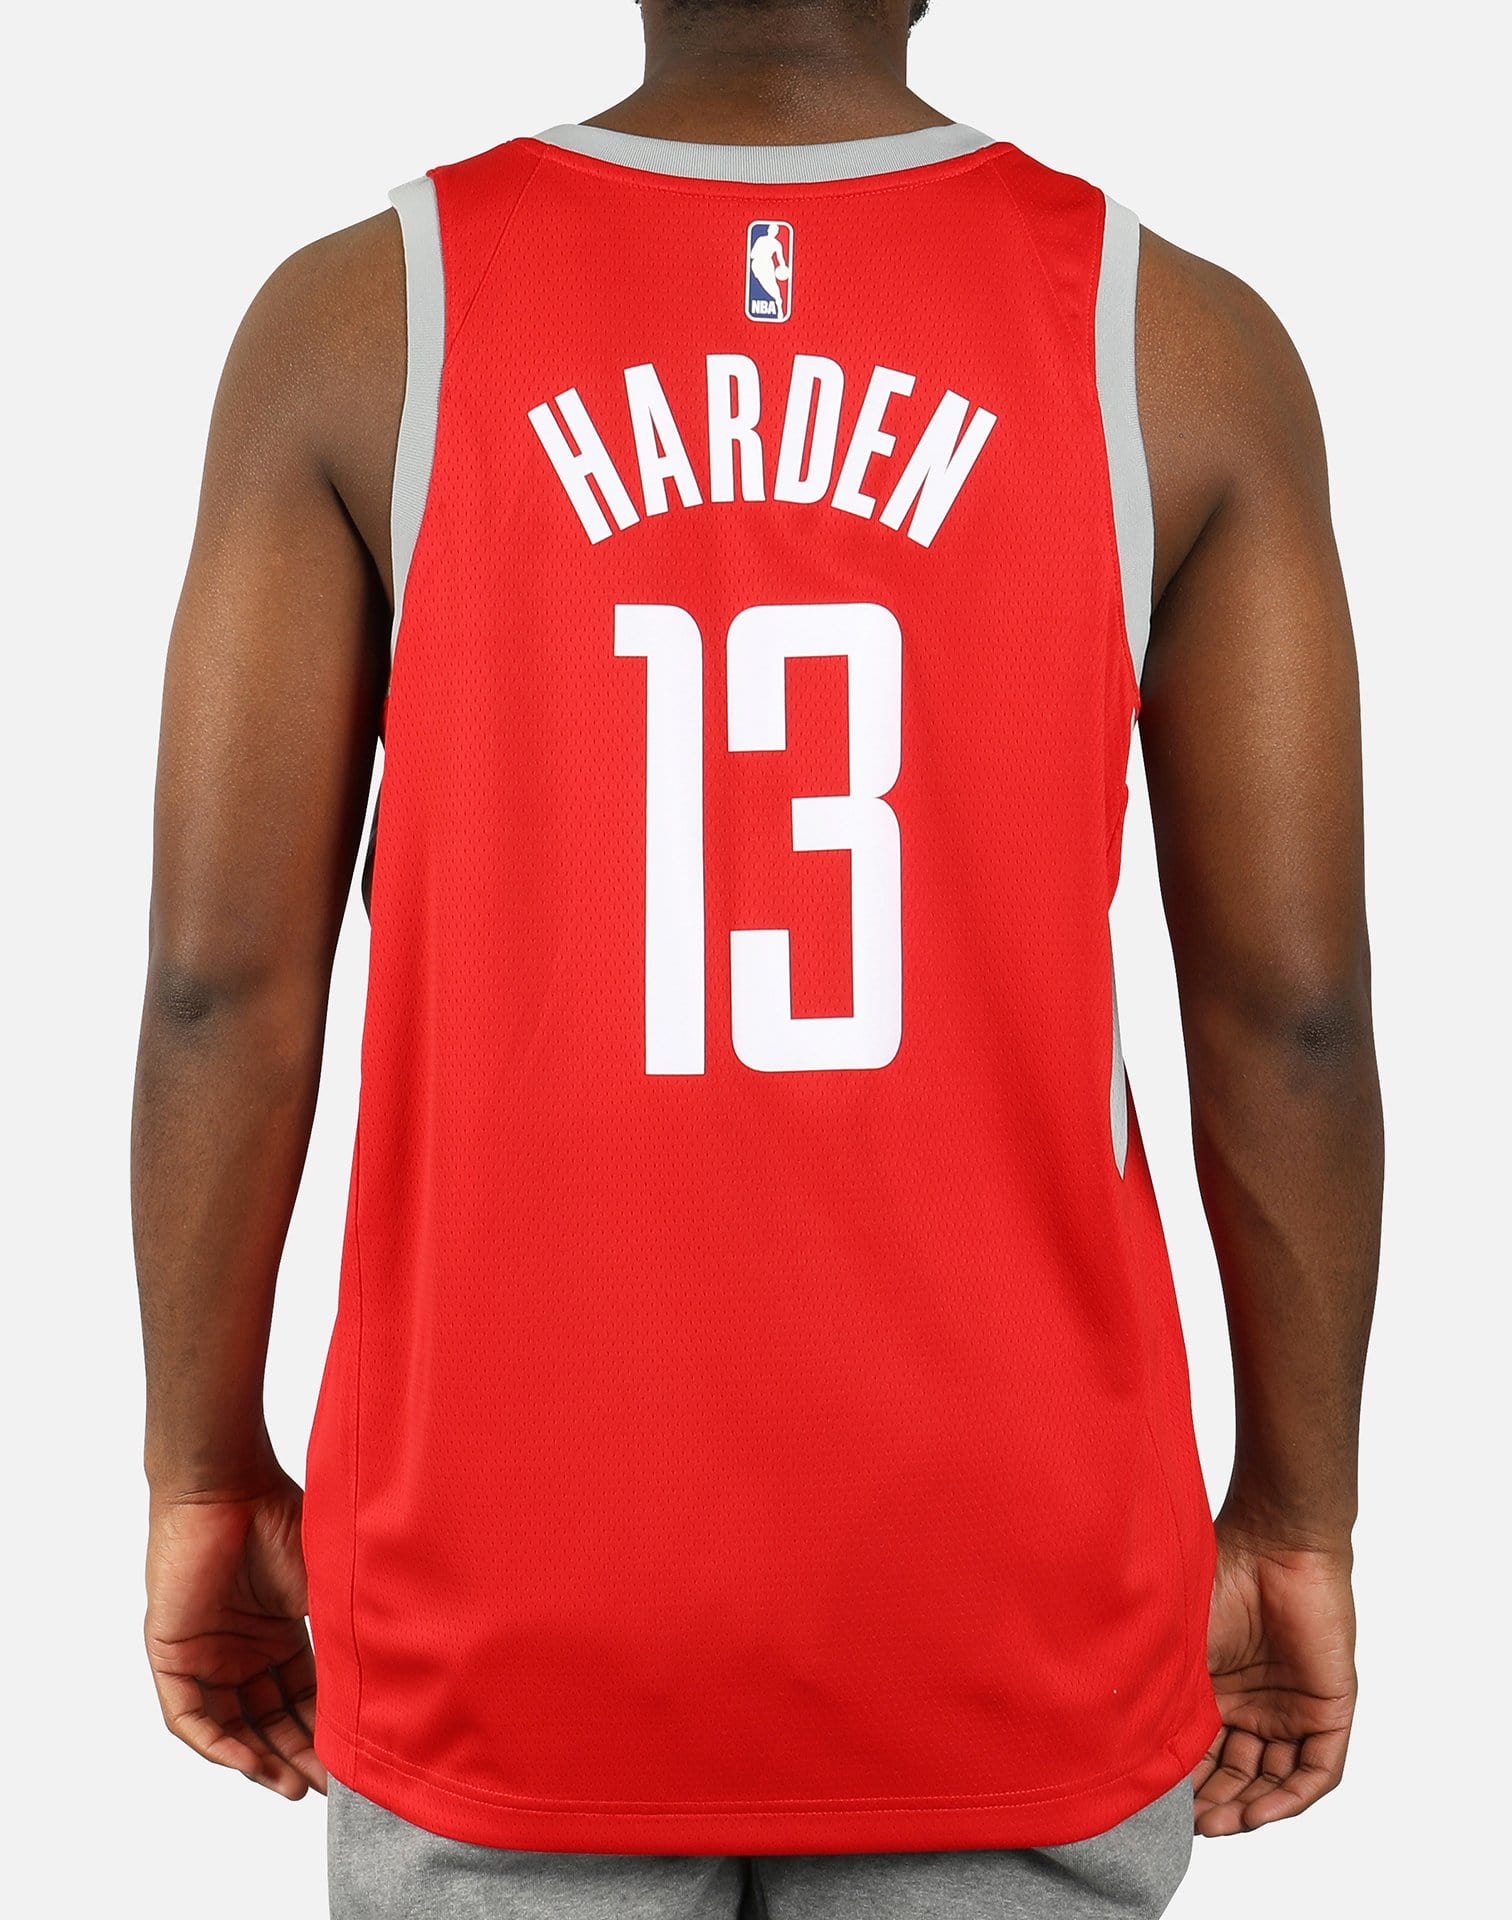 James Harden Houston Rockets Nike Chinese New Year Player T-Shirt - Black 